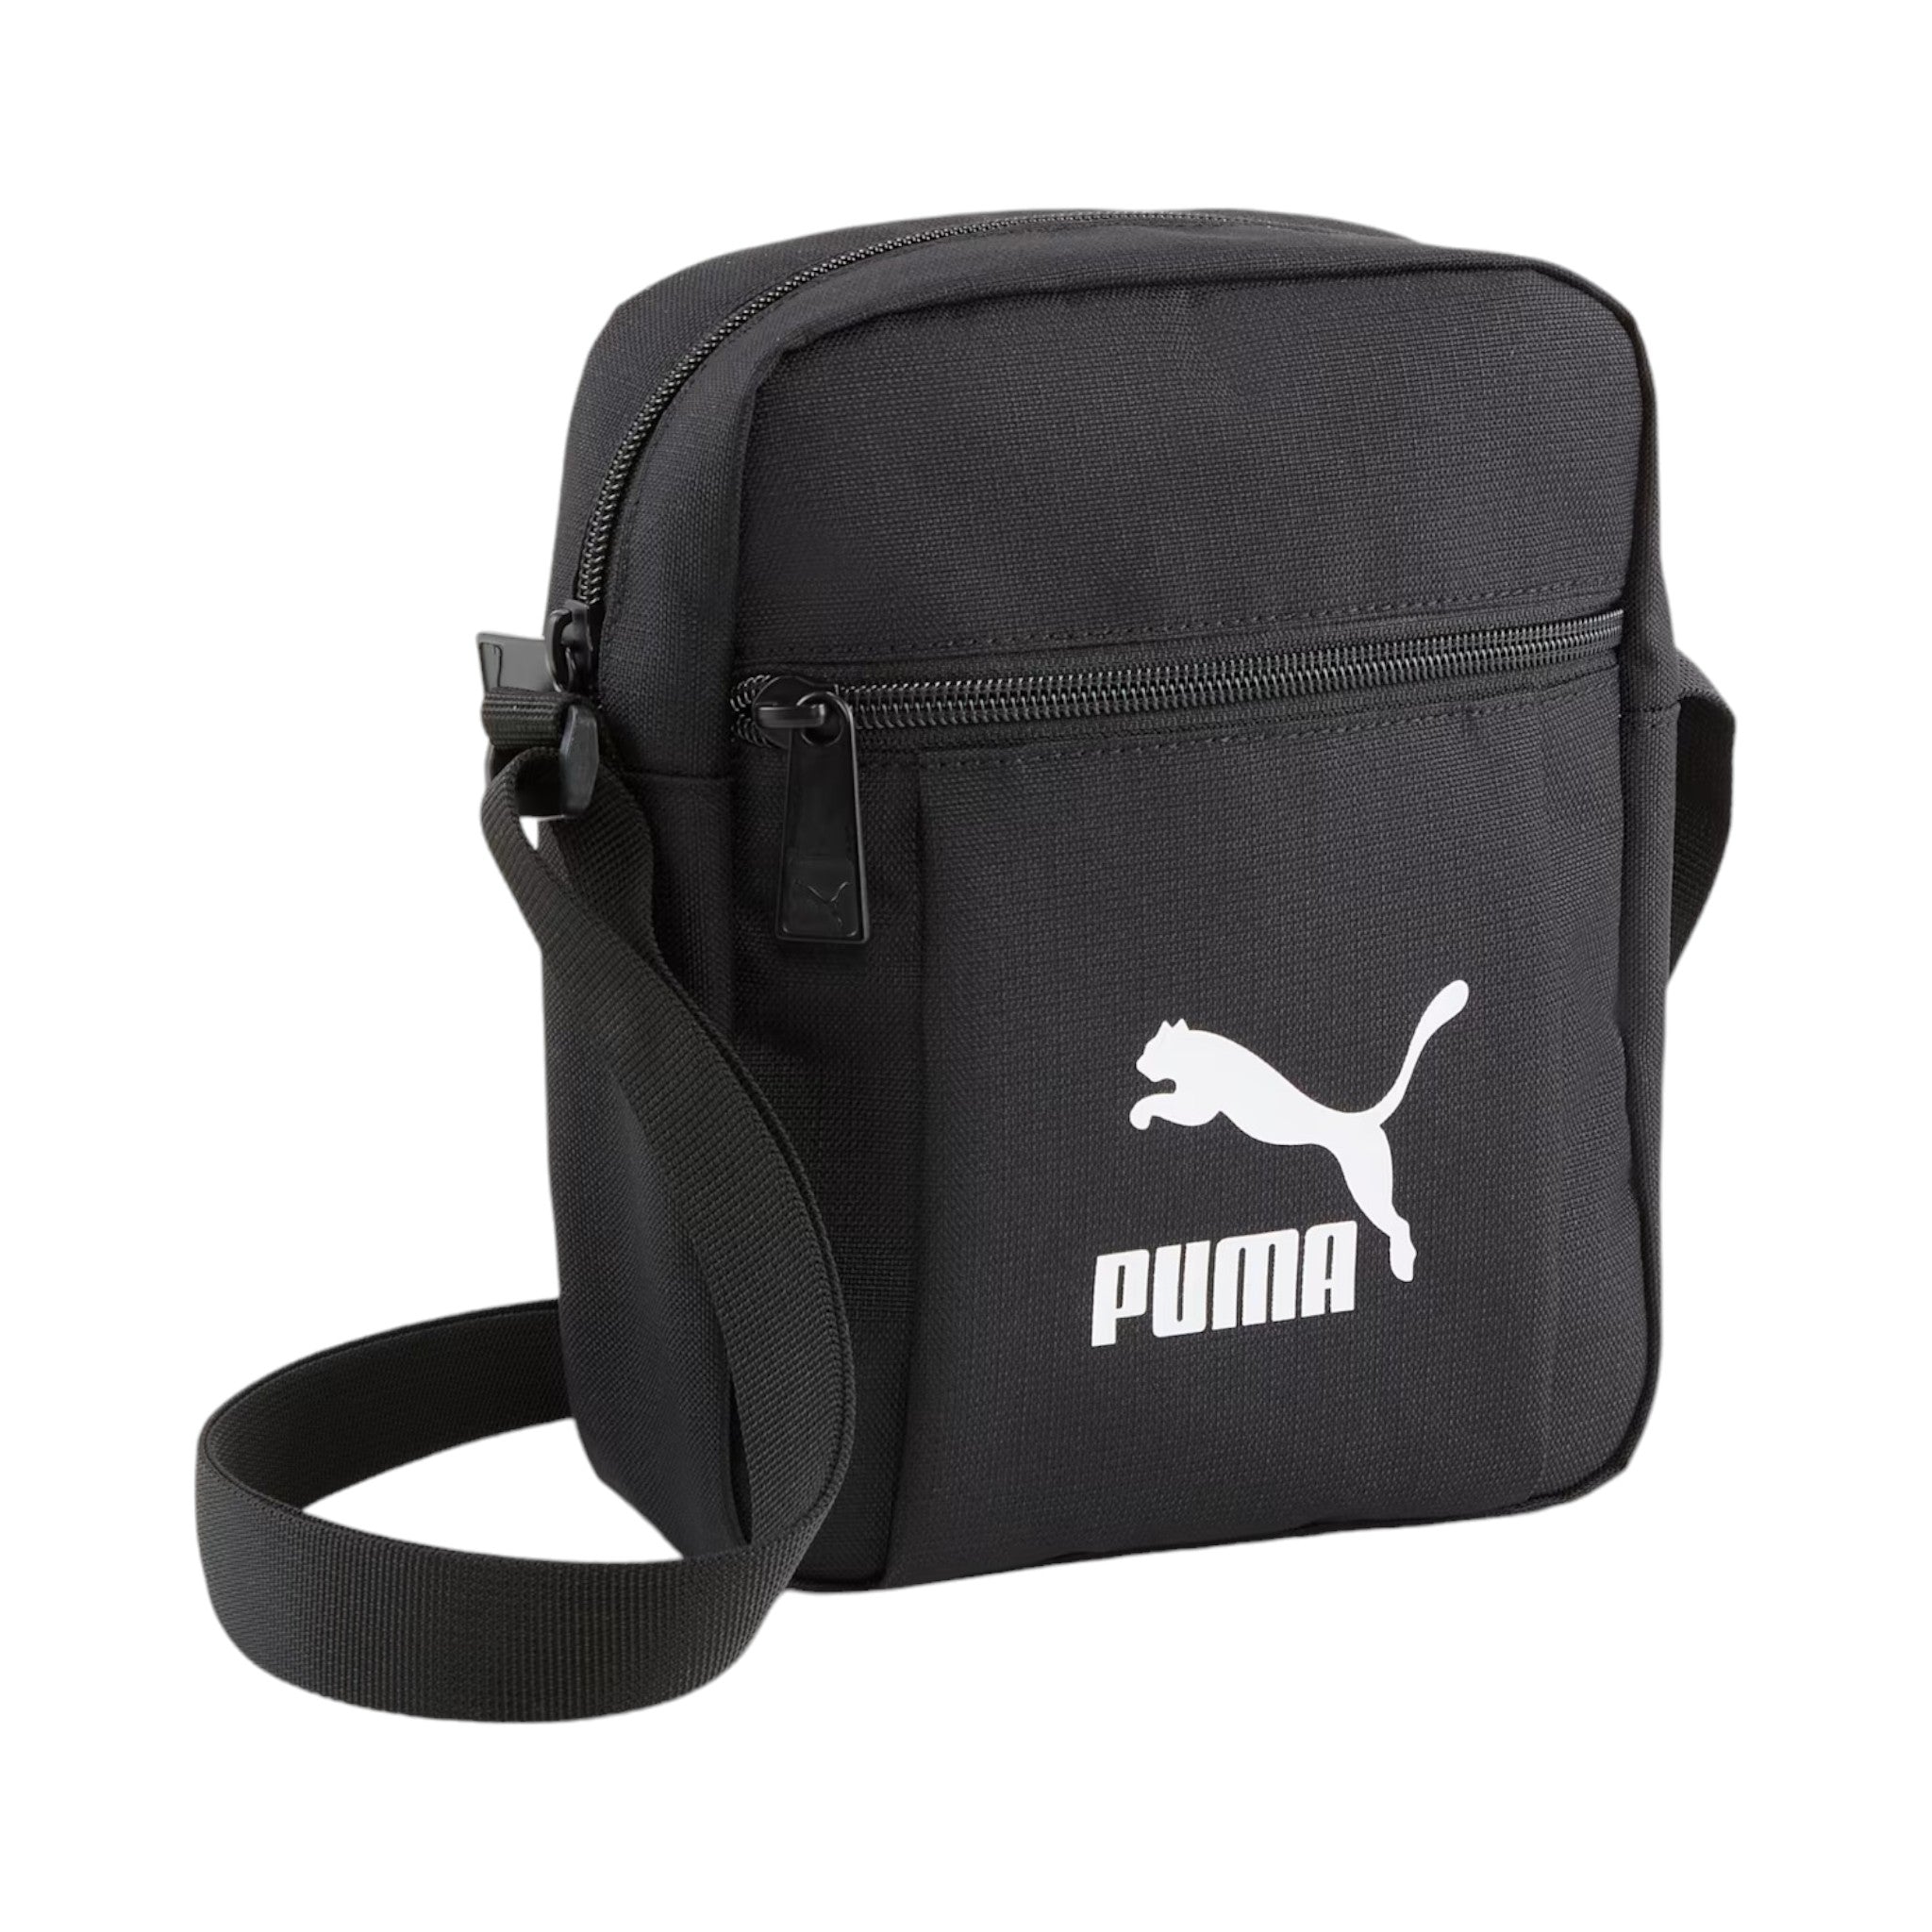 Puma Classic Archive Compact Portable Pouch Black - (079982 01 